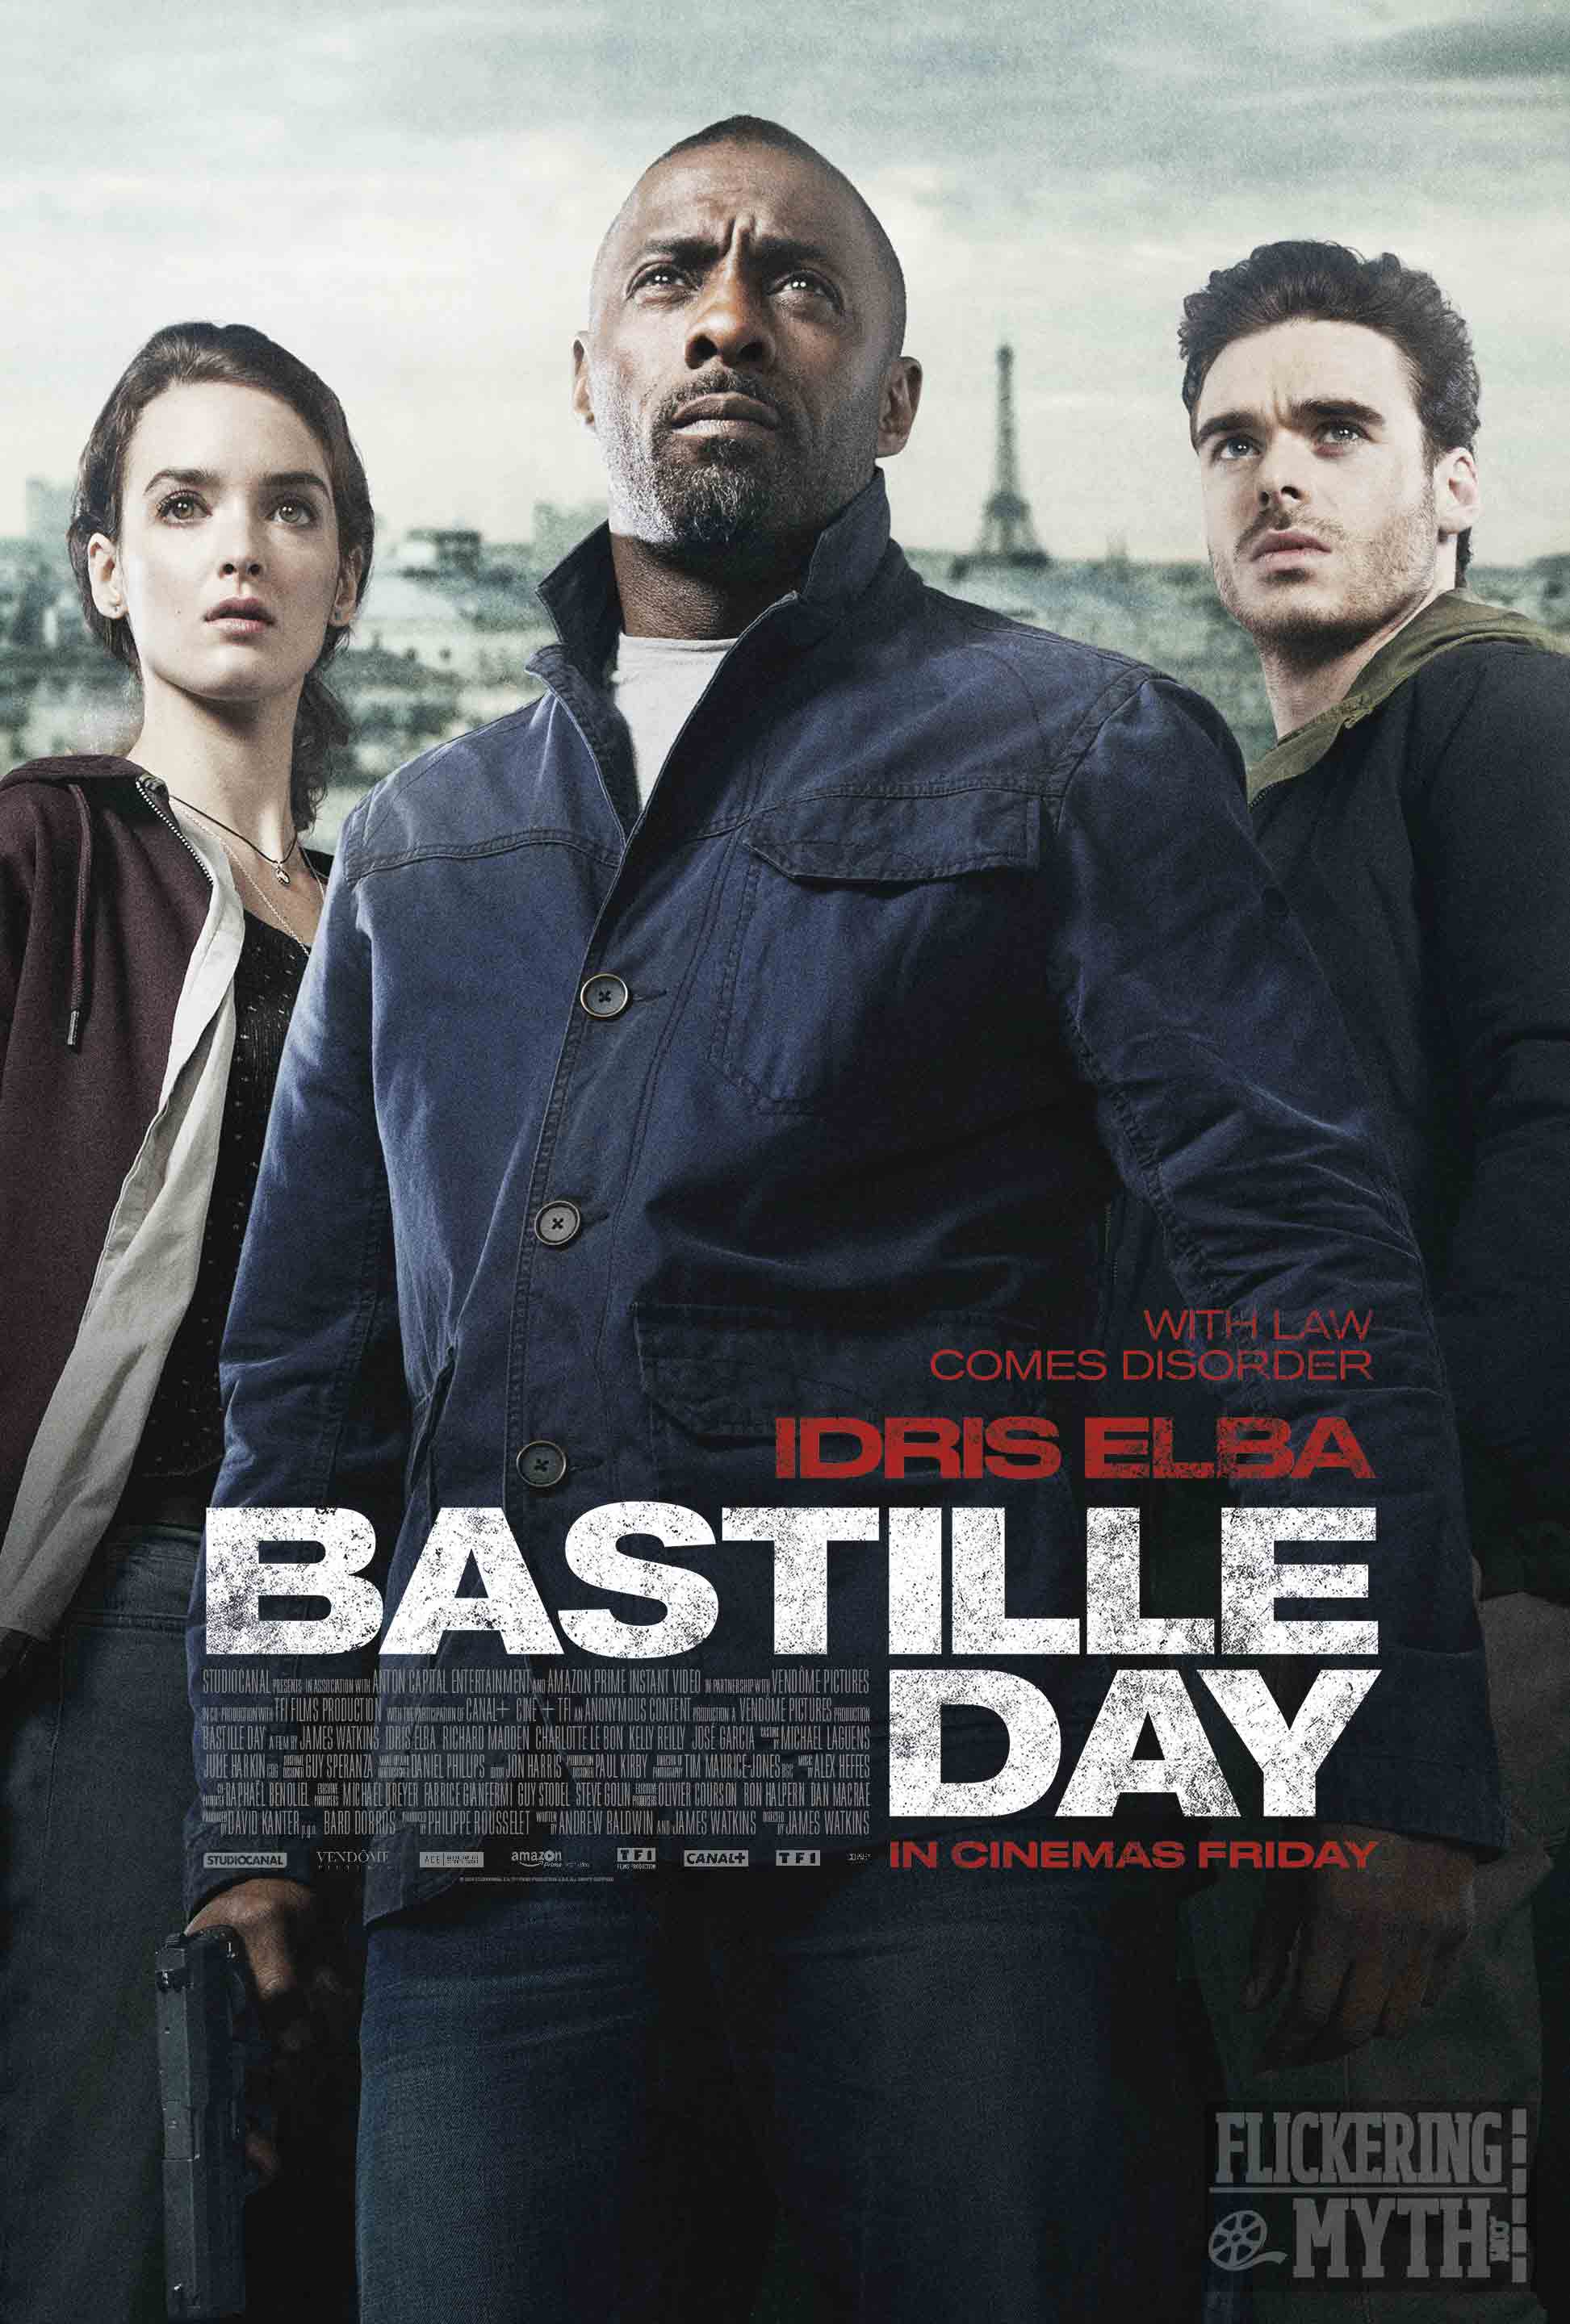 Bastille Day - Poster